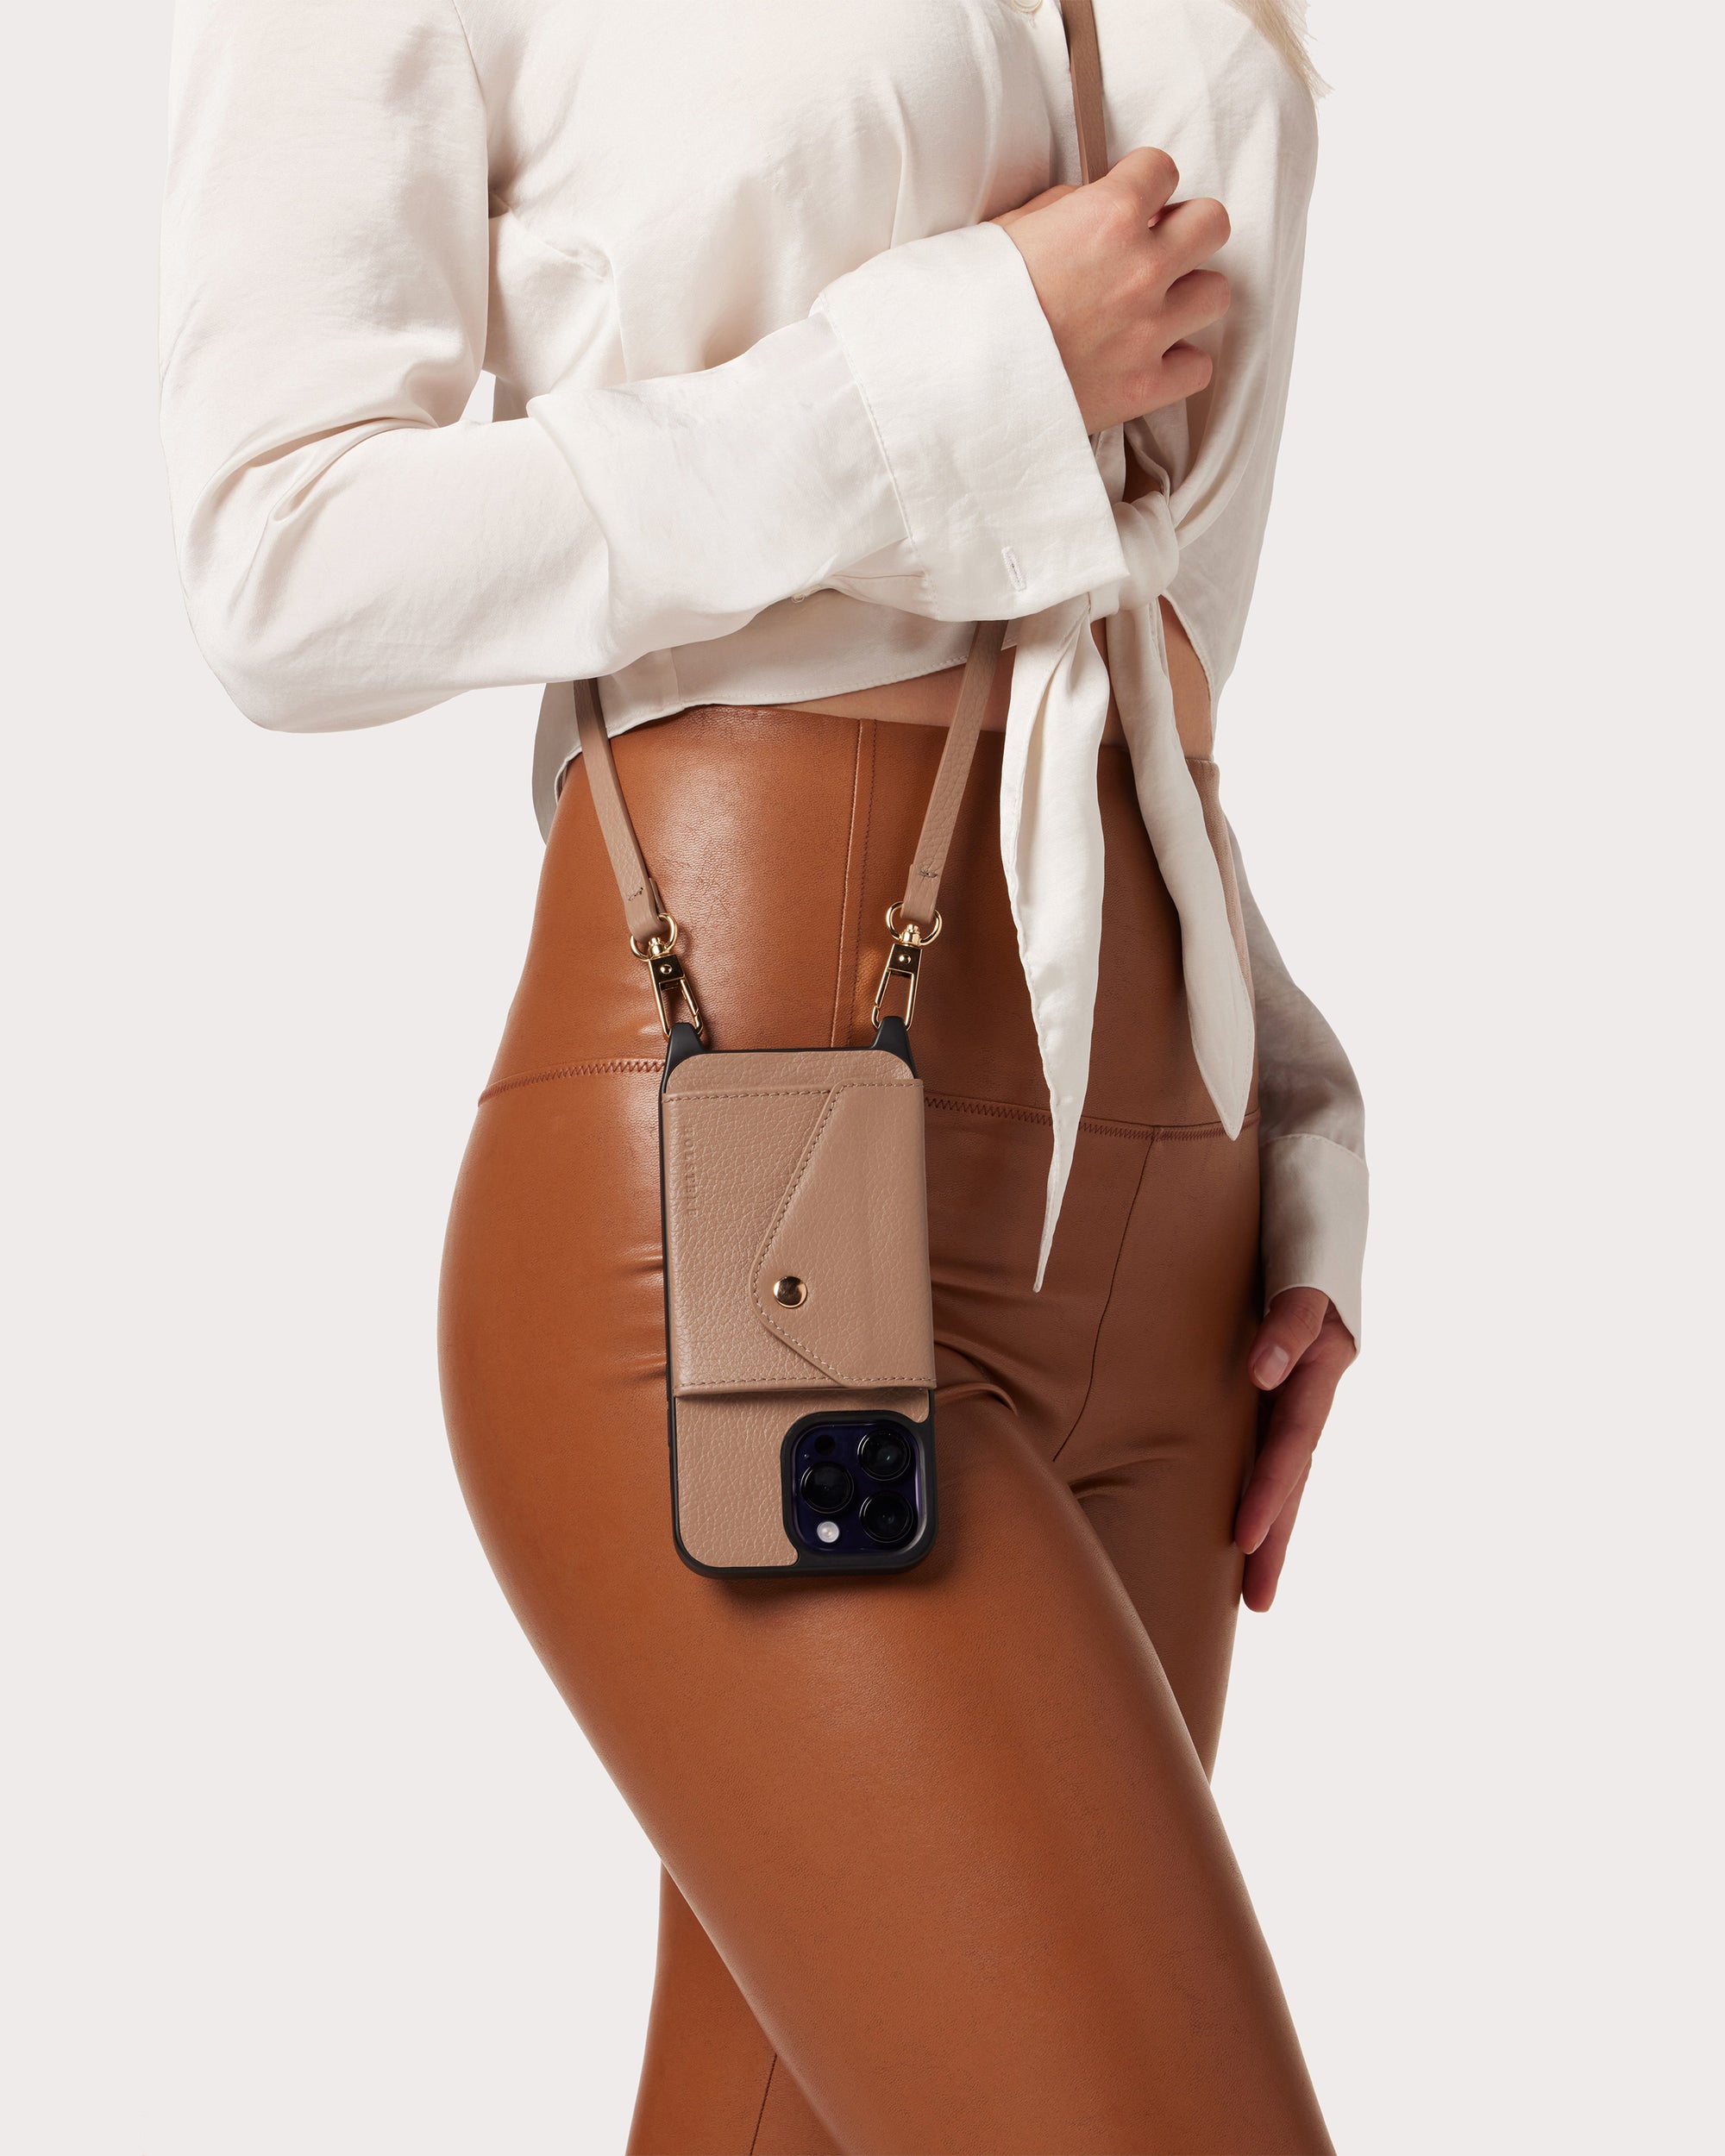 Mobile phone case/purse, chocolate